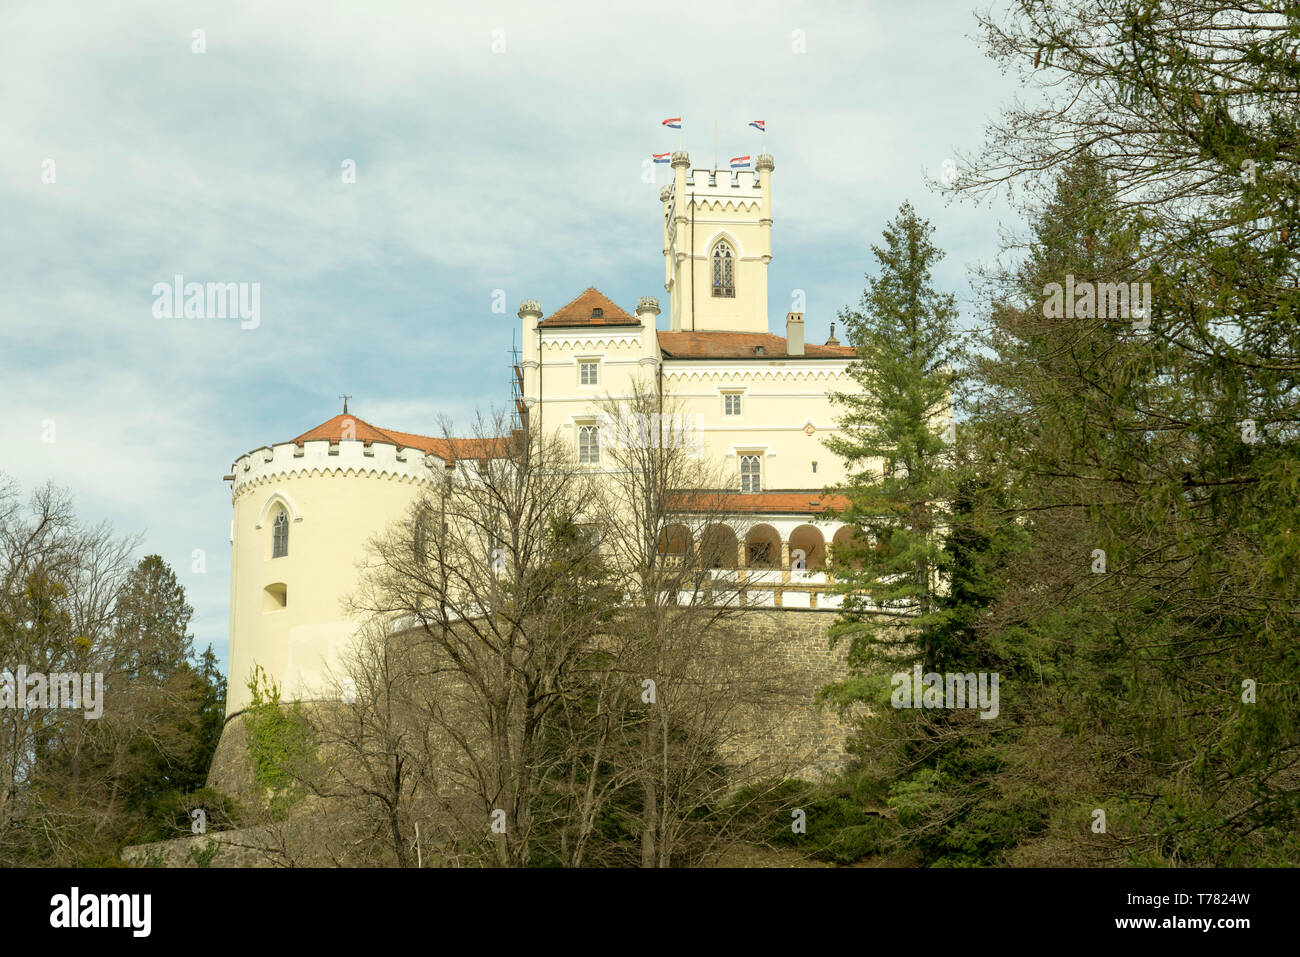 The Trakoscan Castle, Zagorje, Croatia Stock Photo